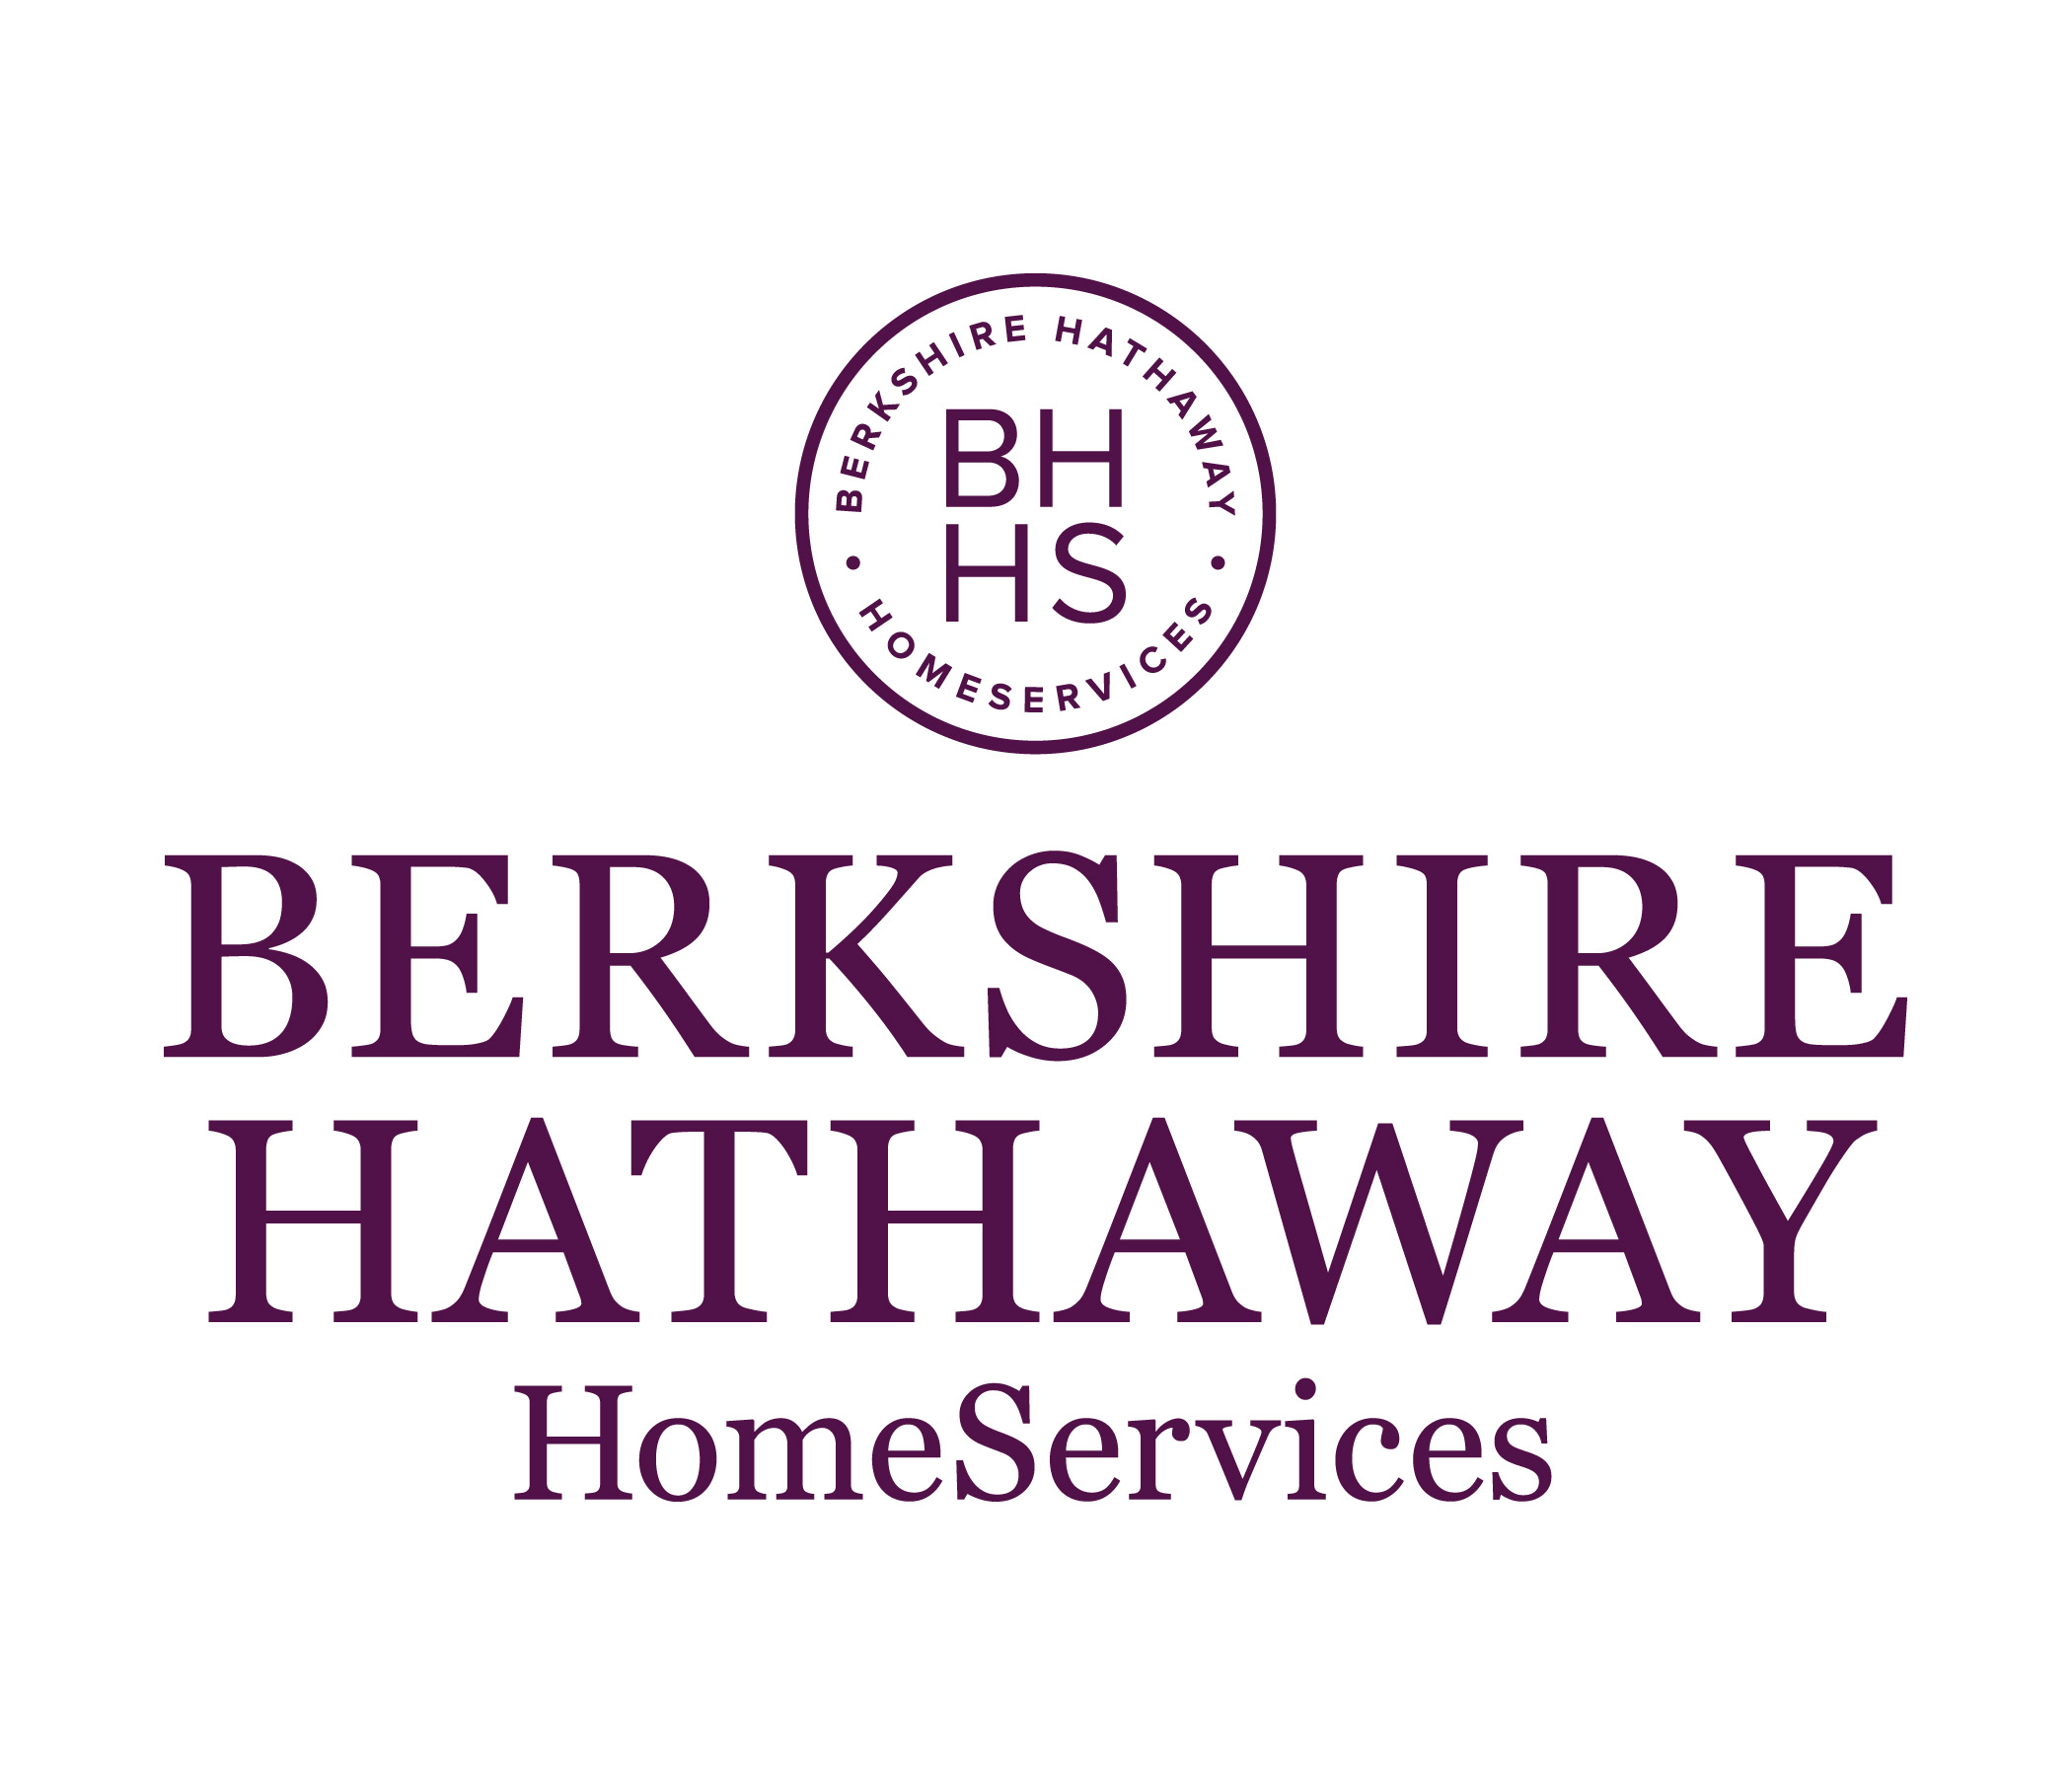 //www.christiancharlesinsurance.com/wp-content/uploads/2015/11/berkshire-hathawy-homeservice.jpg